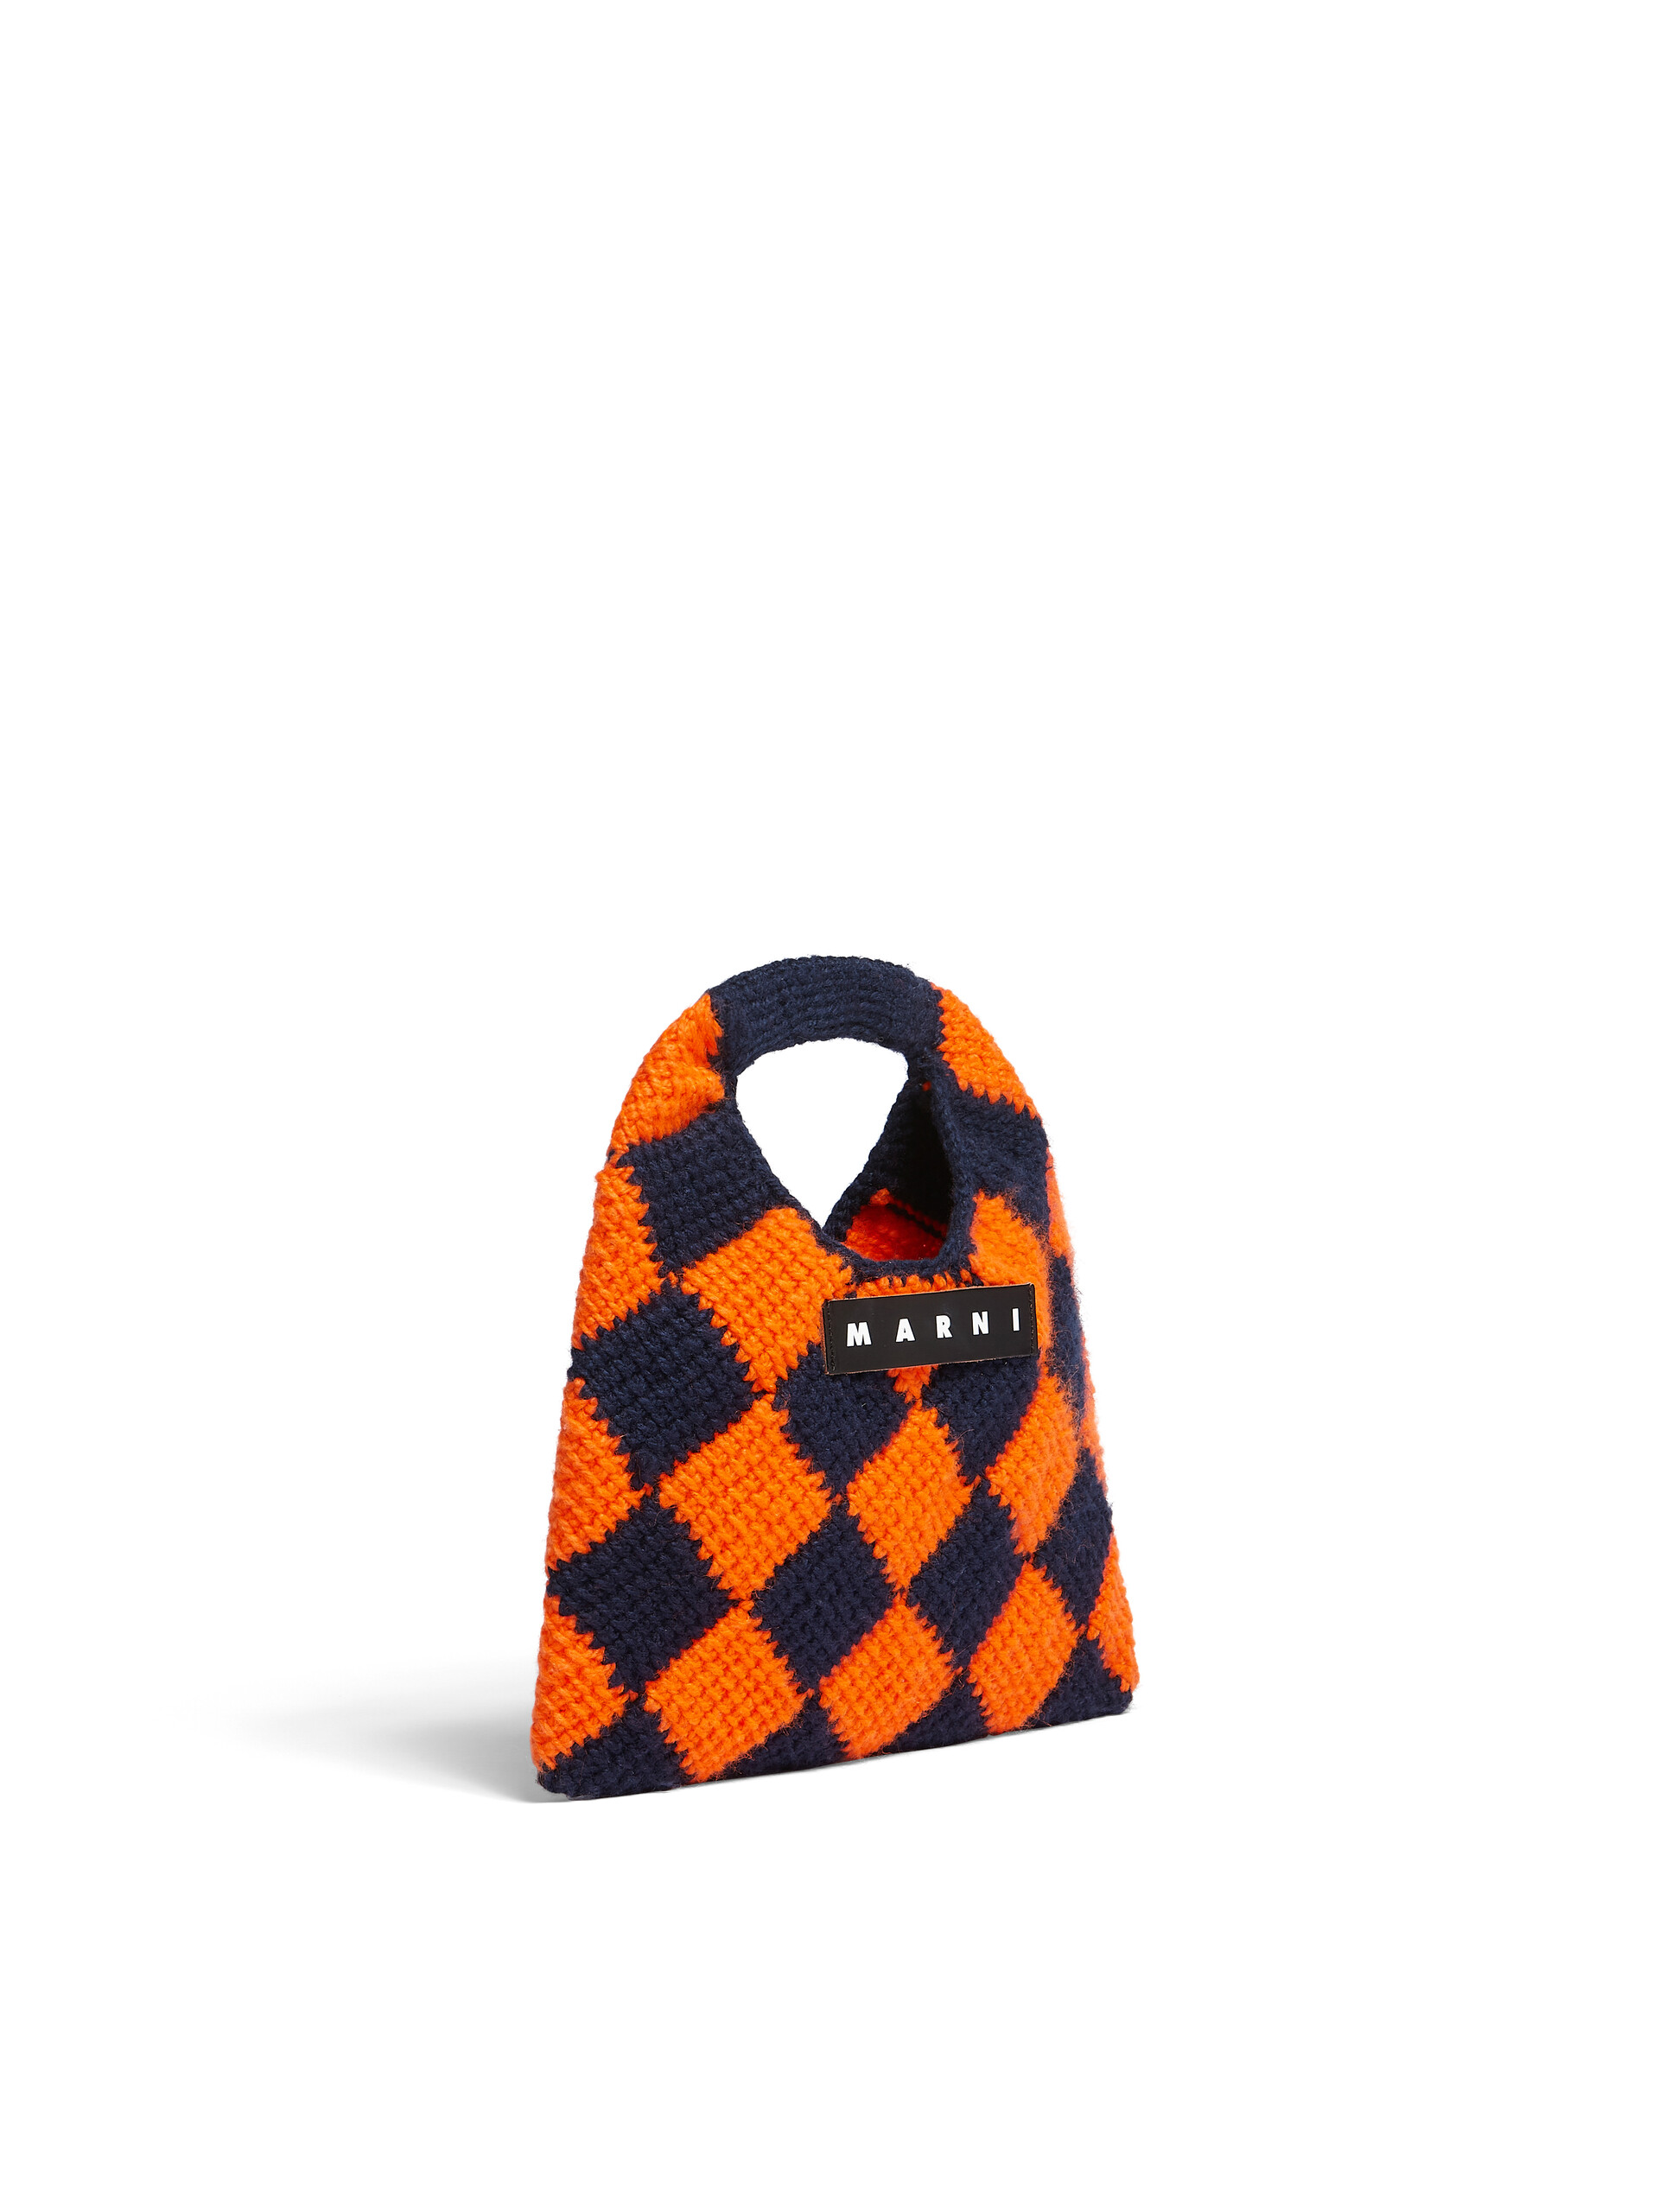 MARNI MARKET DIAMOND MINI bag in orange and blue tech wool - Shopping Bags - Image 2